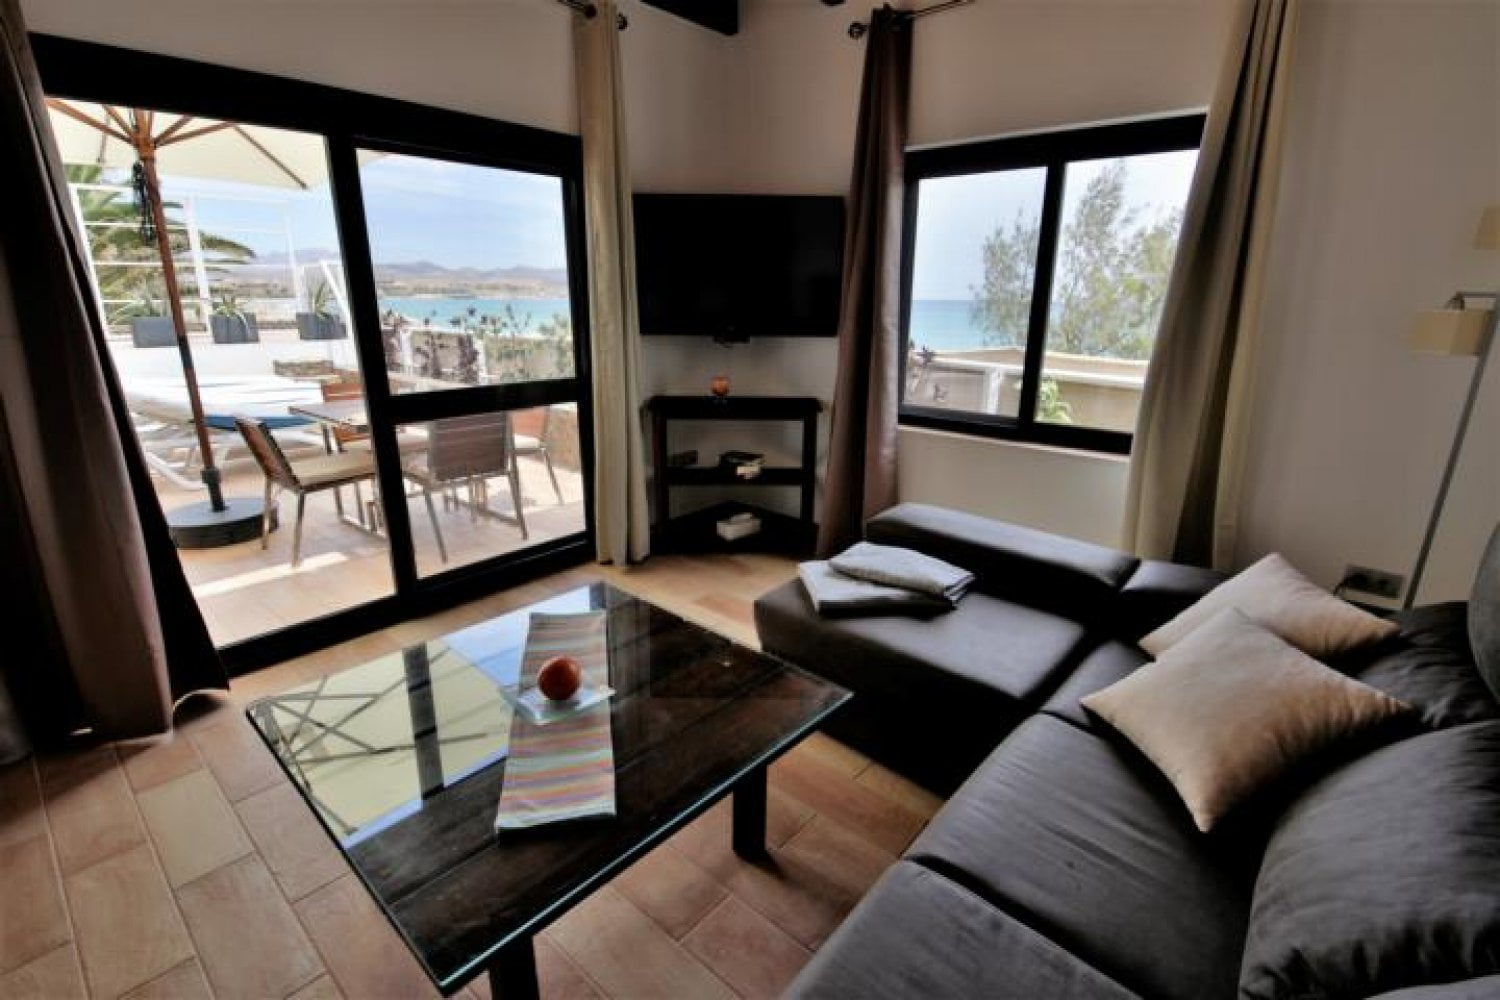 La Torre 4 - Luxury beach apartment on Fuerteventura